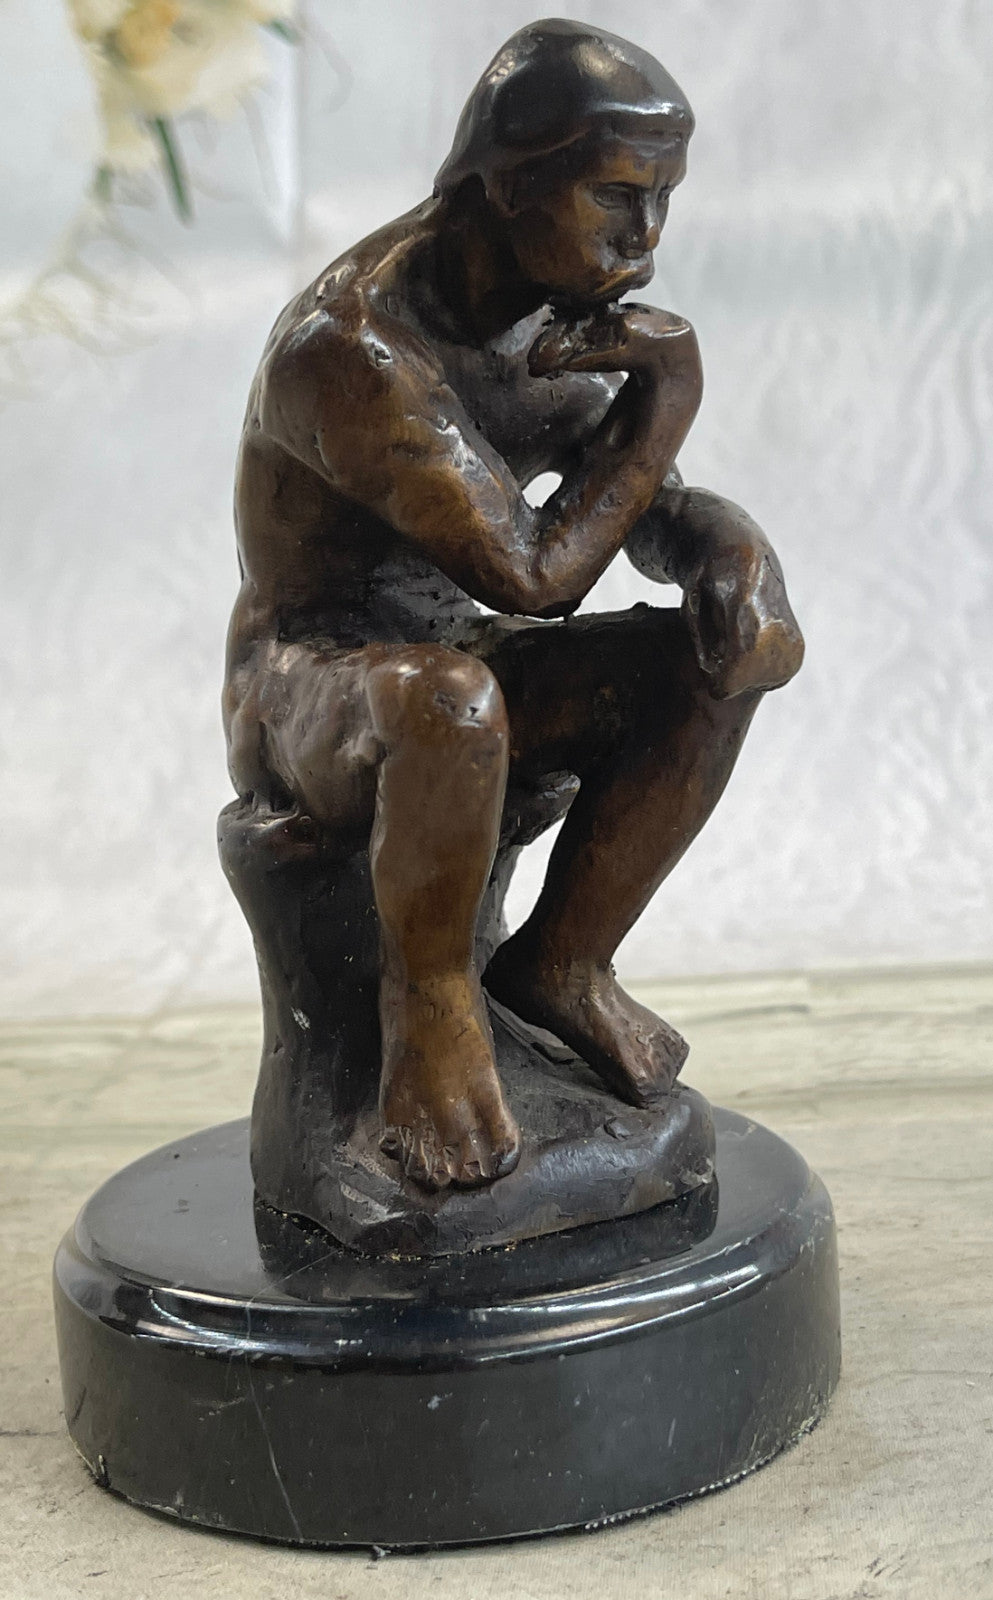 Handcrafted bronze sculpture SALE Deco Art Thinker The Rodin`S Rodin Elegant ART